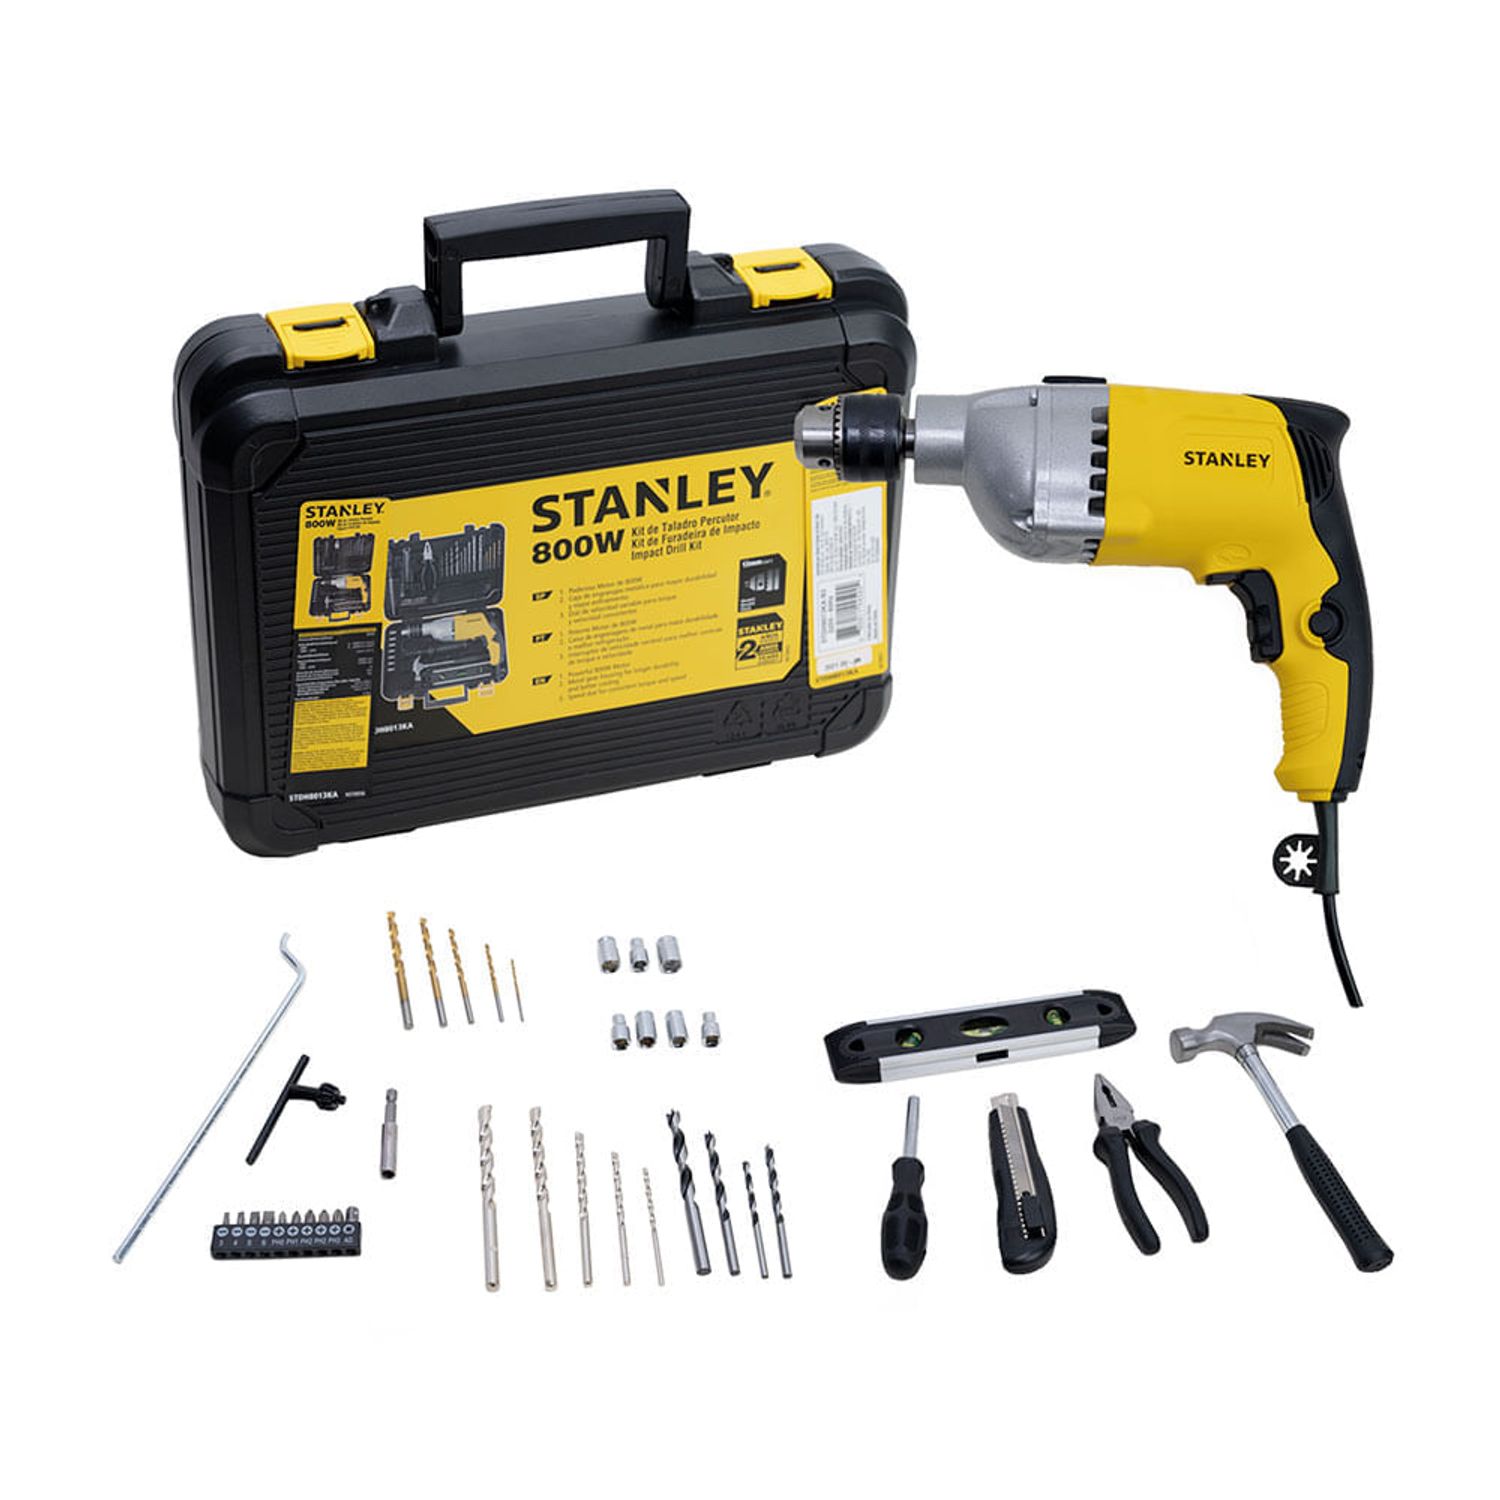 Taladro percutor 1/2 800W + Set de herramientas Stanley - Oechsle